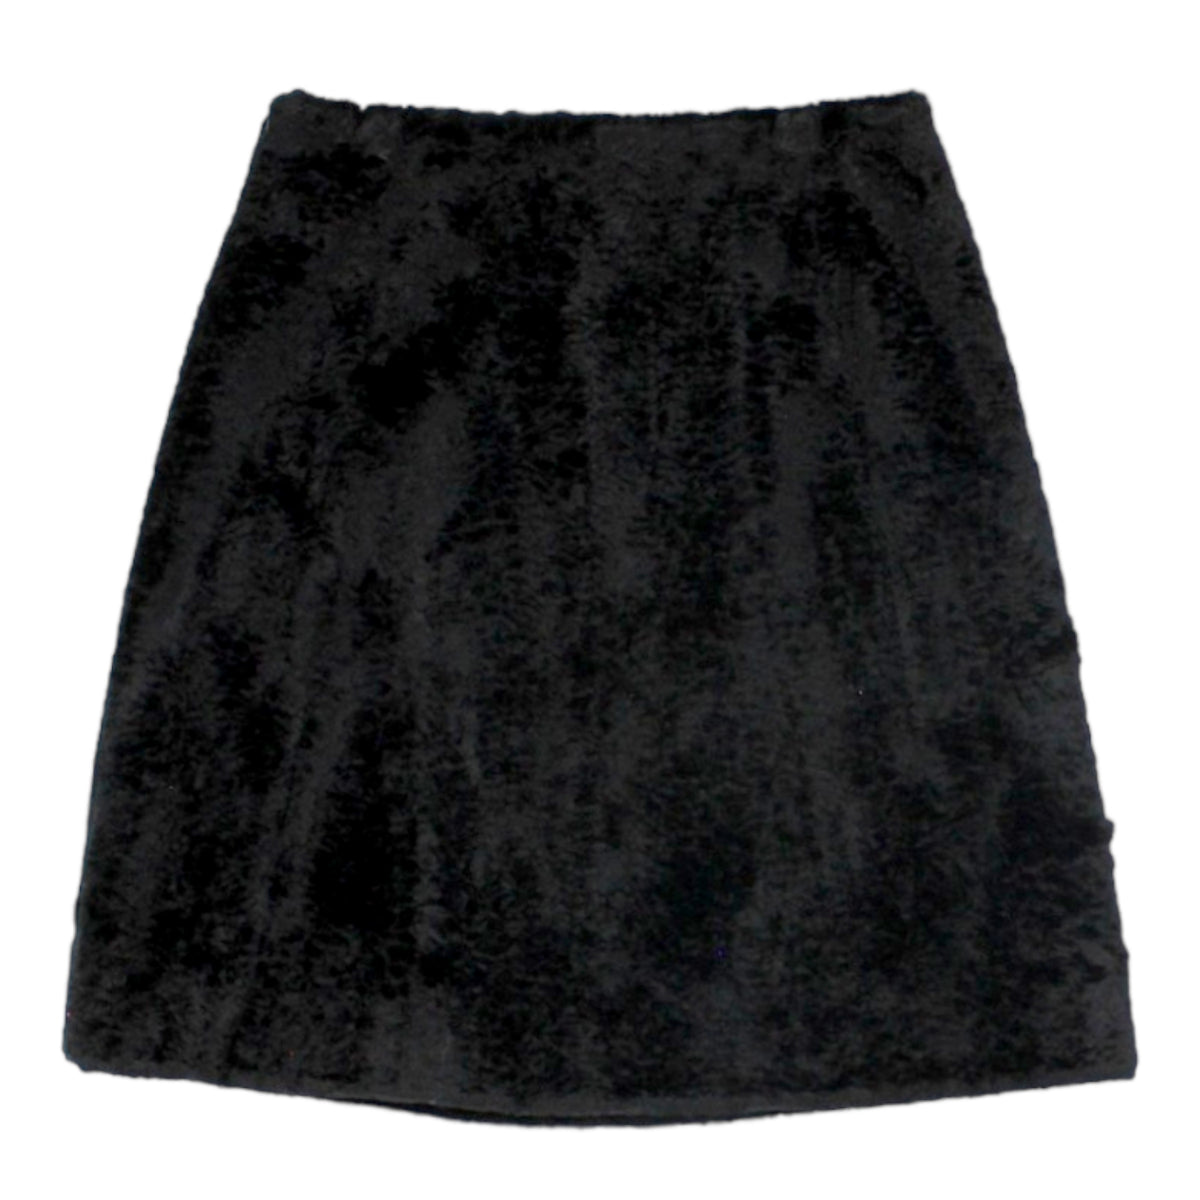 Orla Kiely Black Furry Mini Skirt